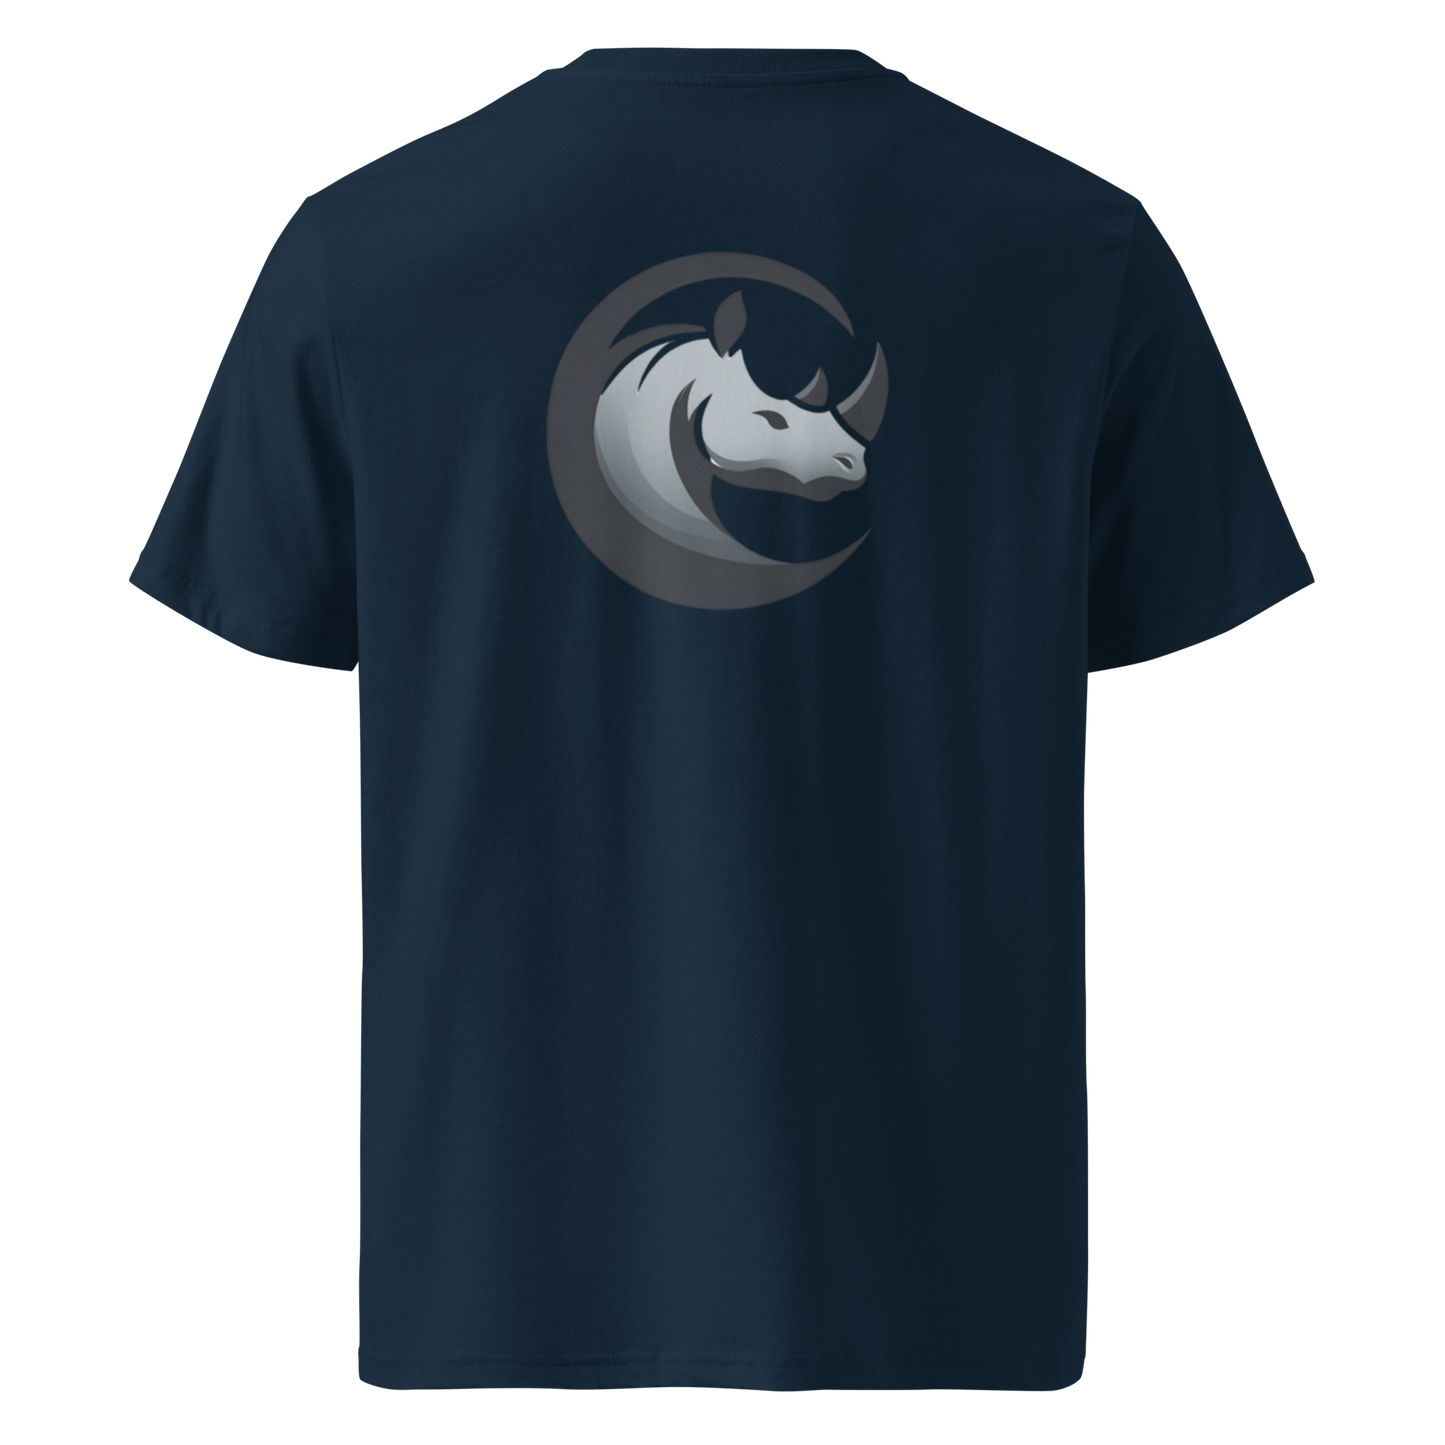 Circle of Strength - Black Rhino T-Shirt